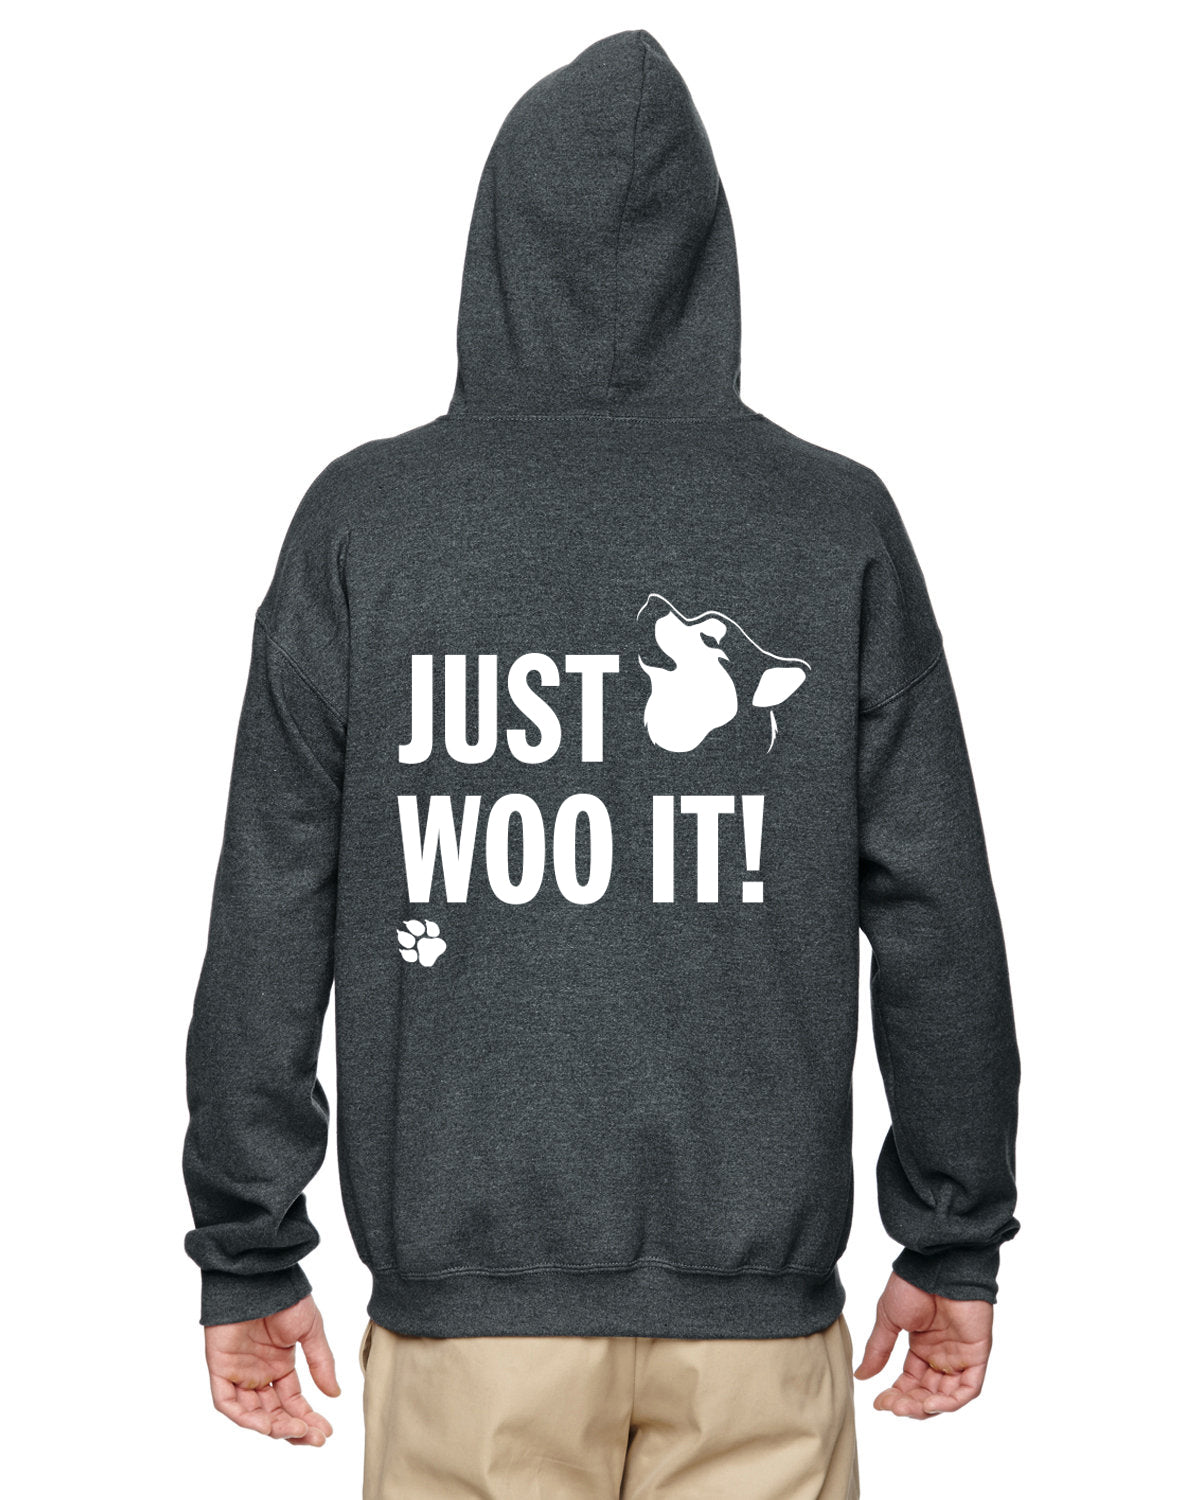 JUST WOO IT - Siberian Husky, Alaskan Malamute Zip Hooded Sweatshirt